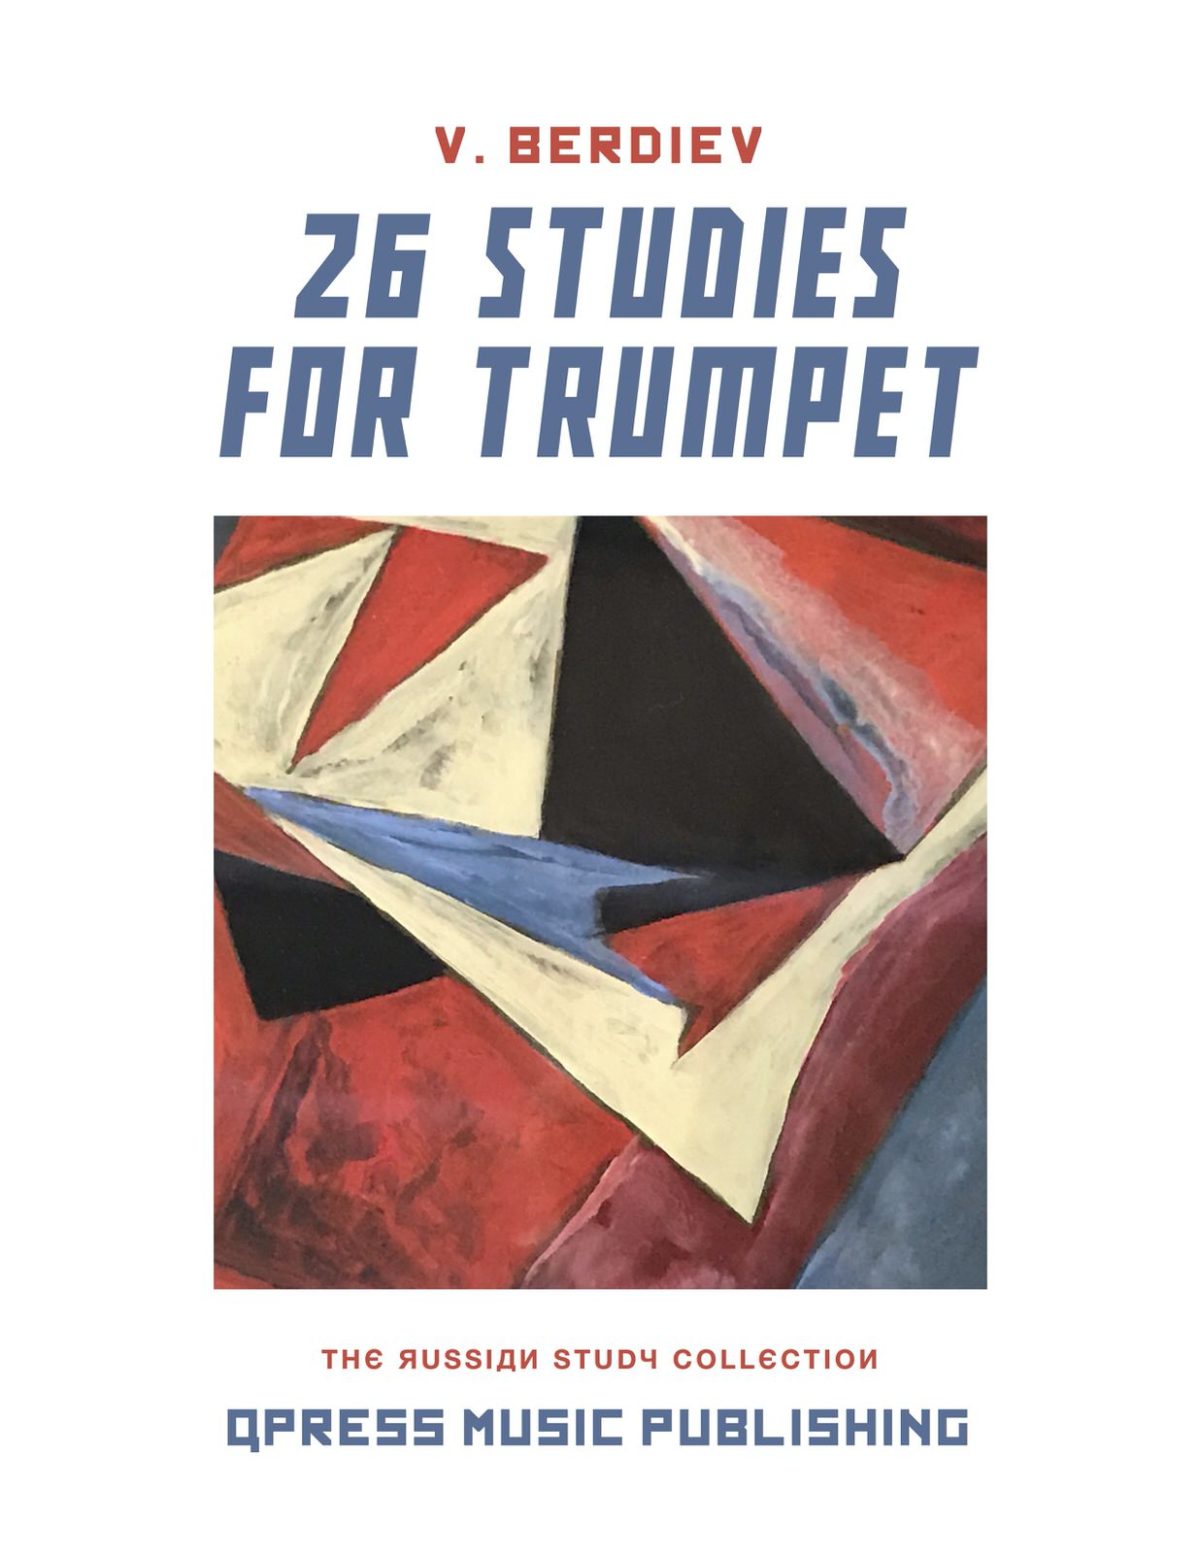 26 Studies for Trumpet